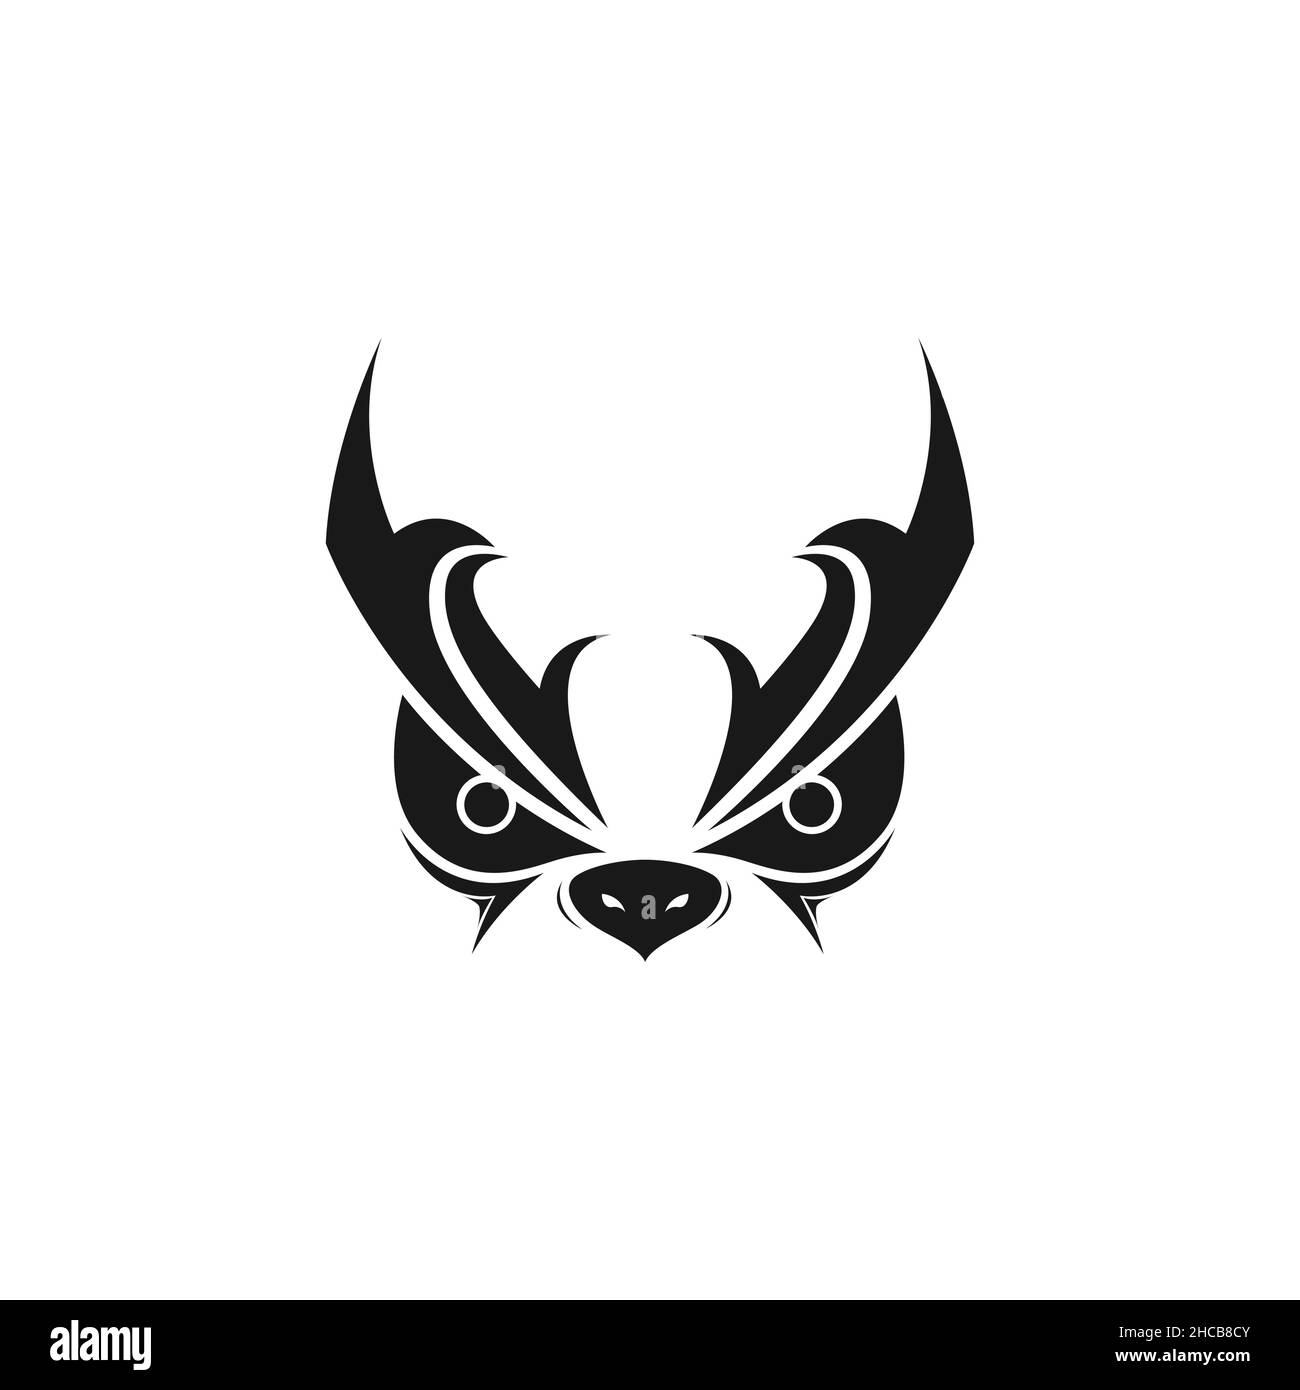 face bird art black mask logo design vector graphic symbol icon sign illustration creative idea Stock Vector